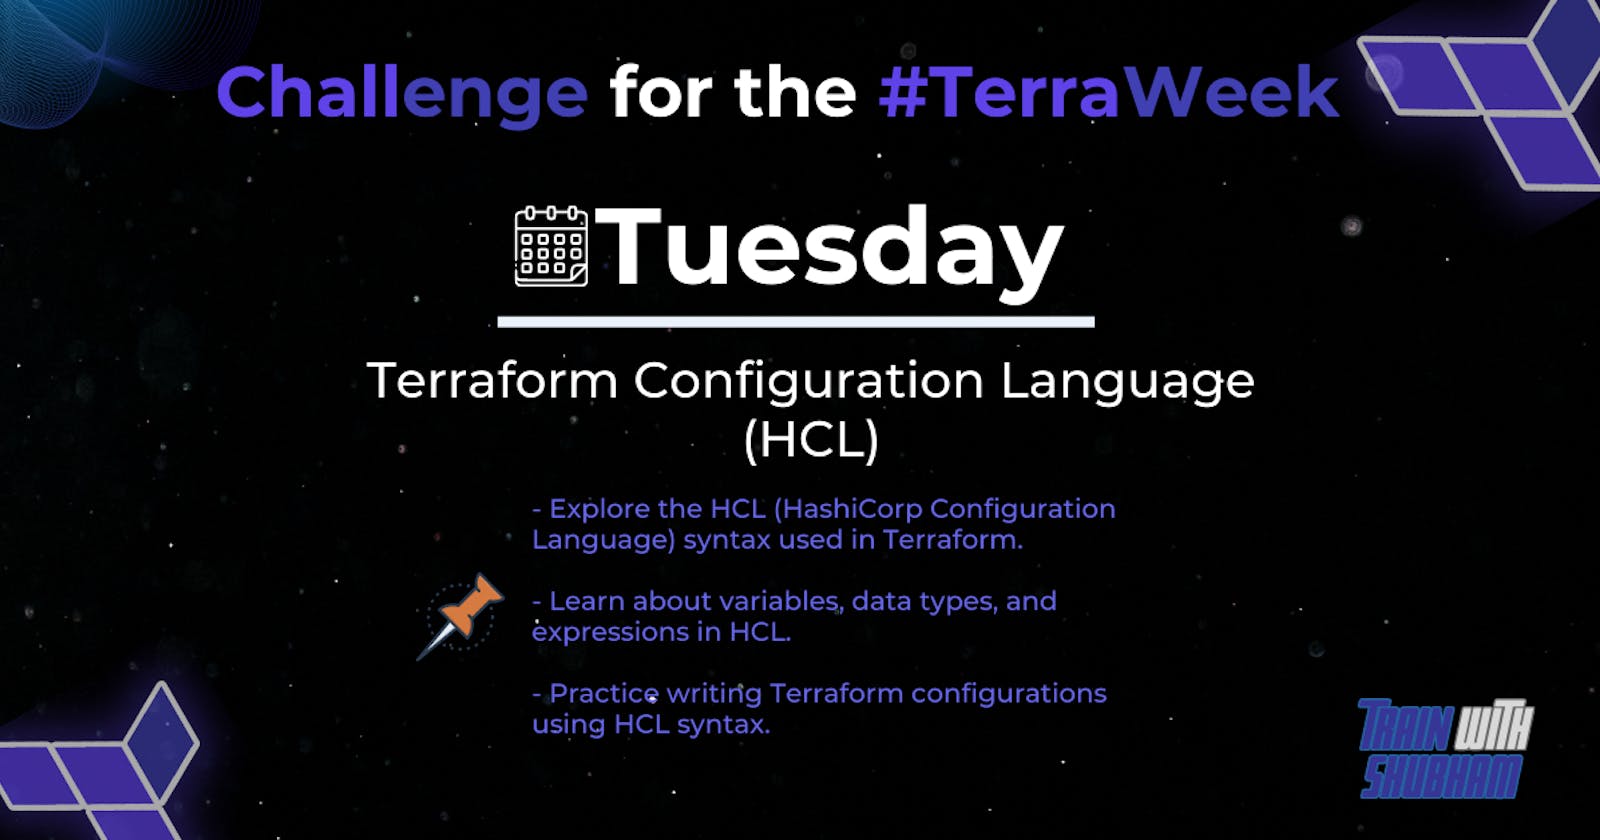 Day 2: Understanding  Terraform Configuration Language (HCL)